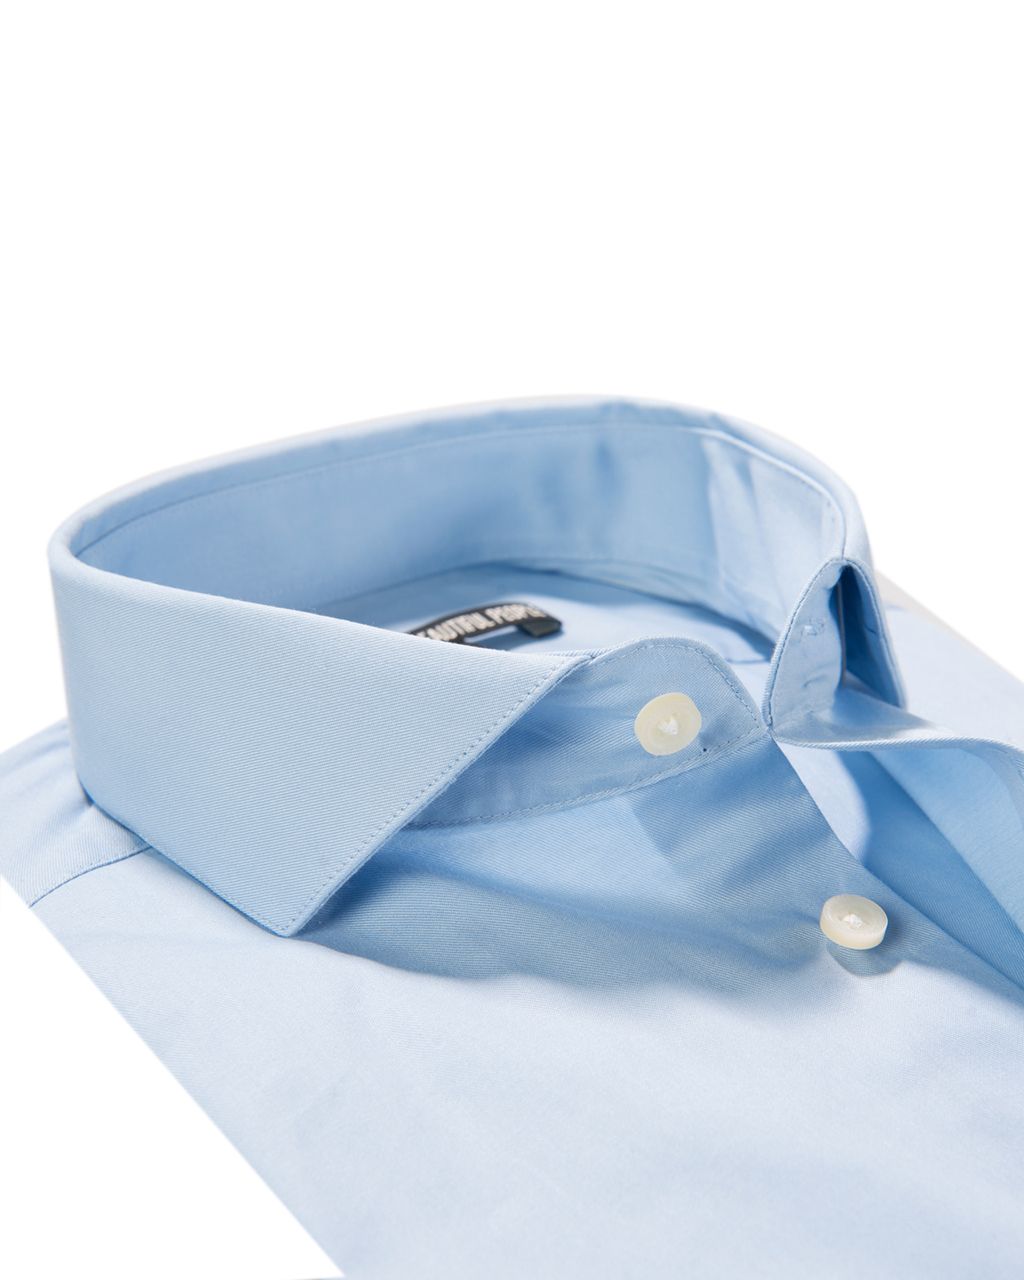 Drykorn Elias Slim fit Overhemd LM Blauw 014267-32-37